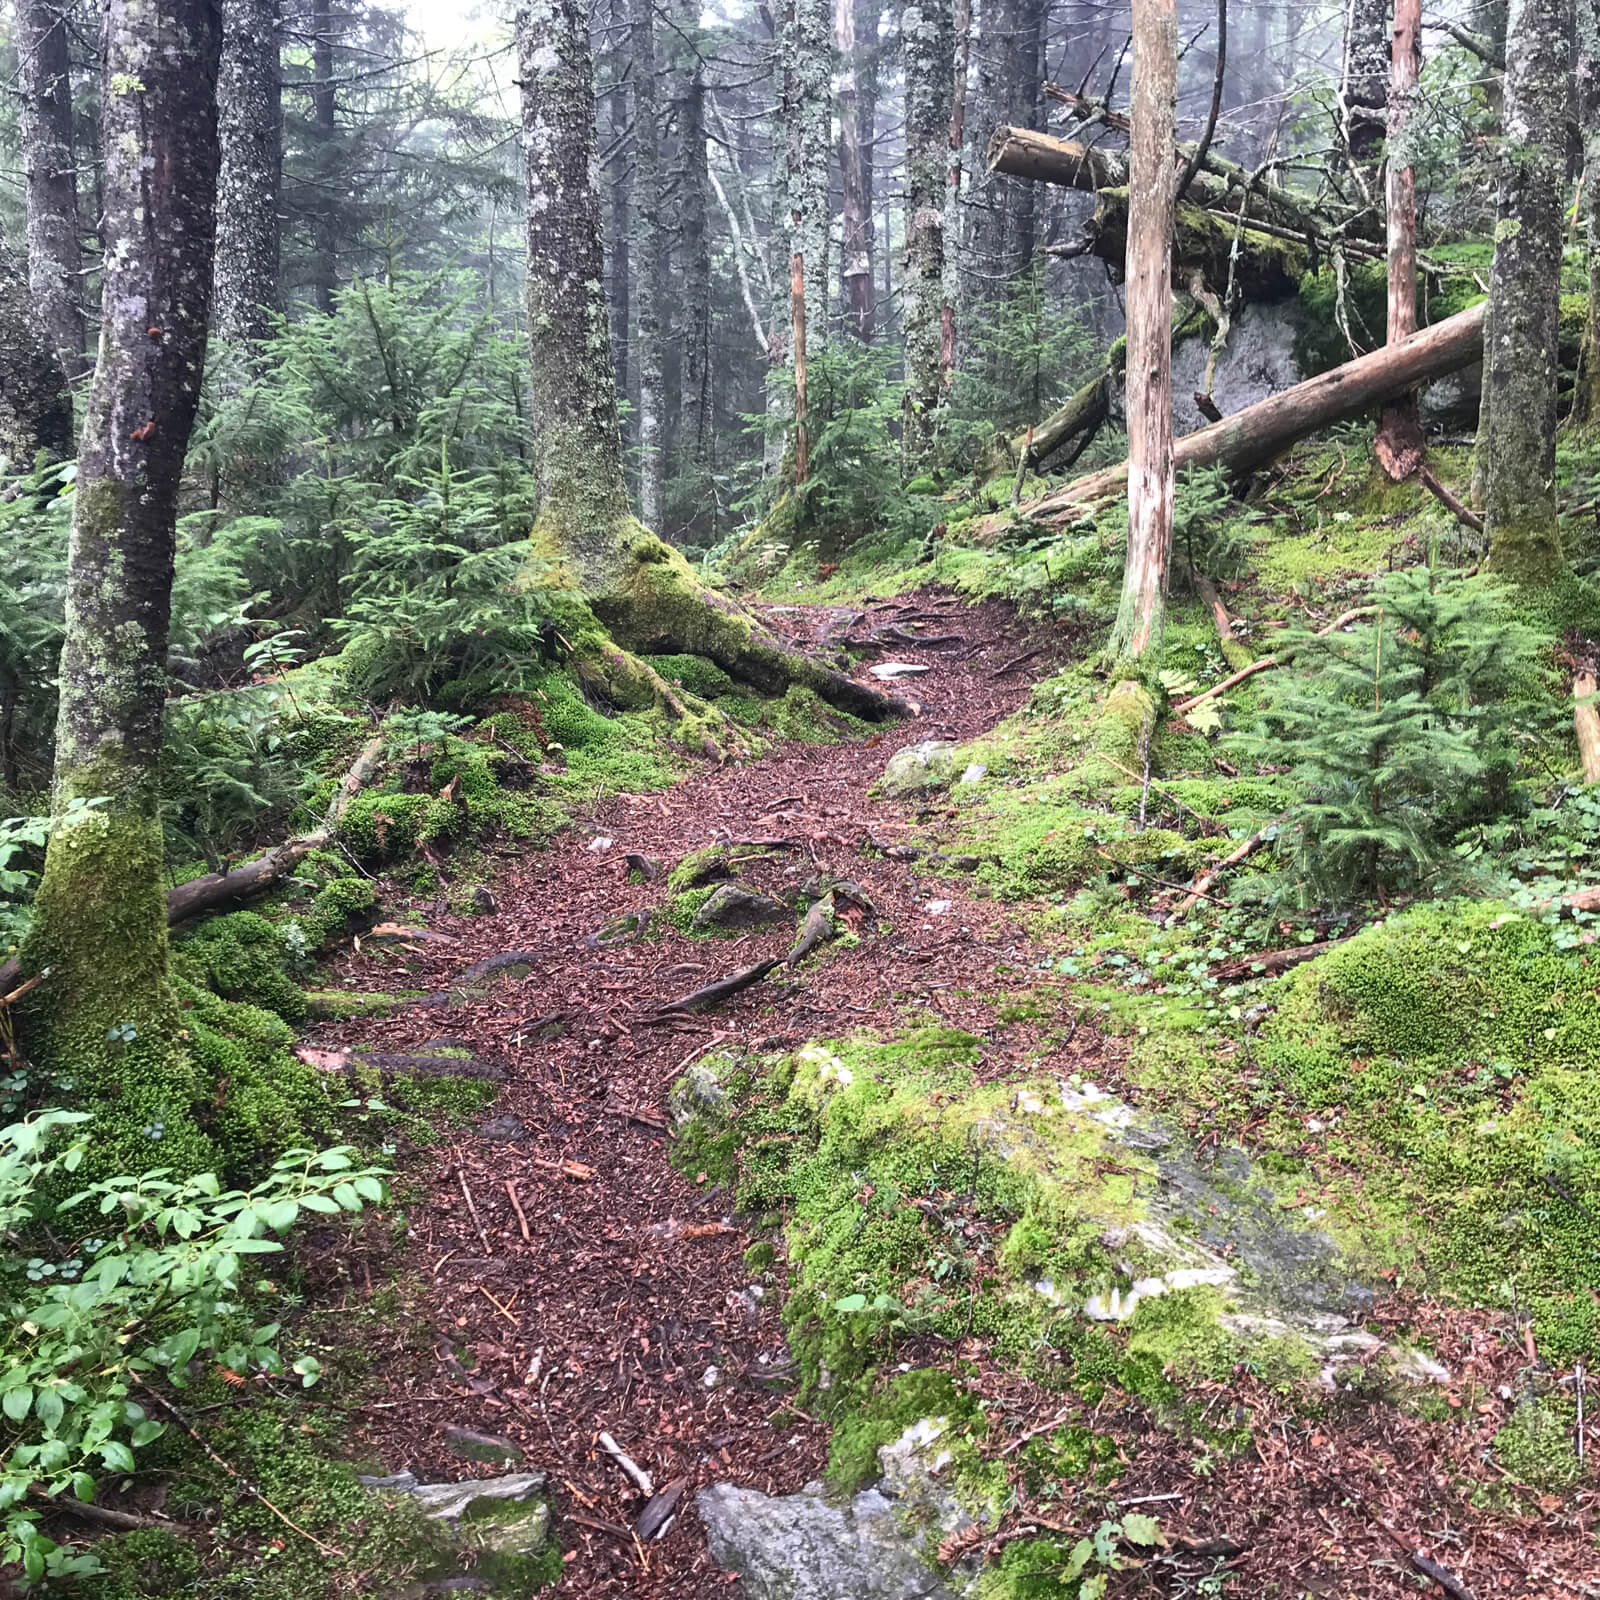 A Vermont long trail scene